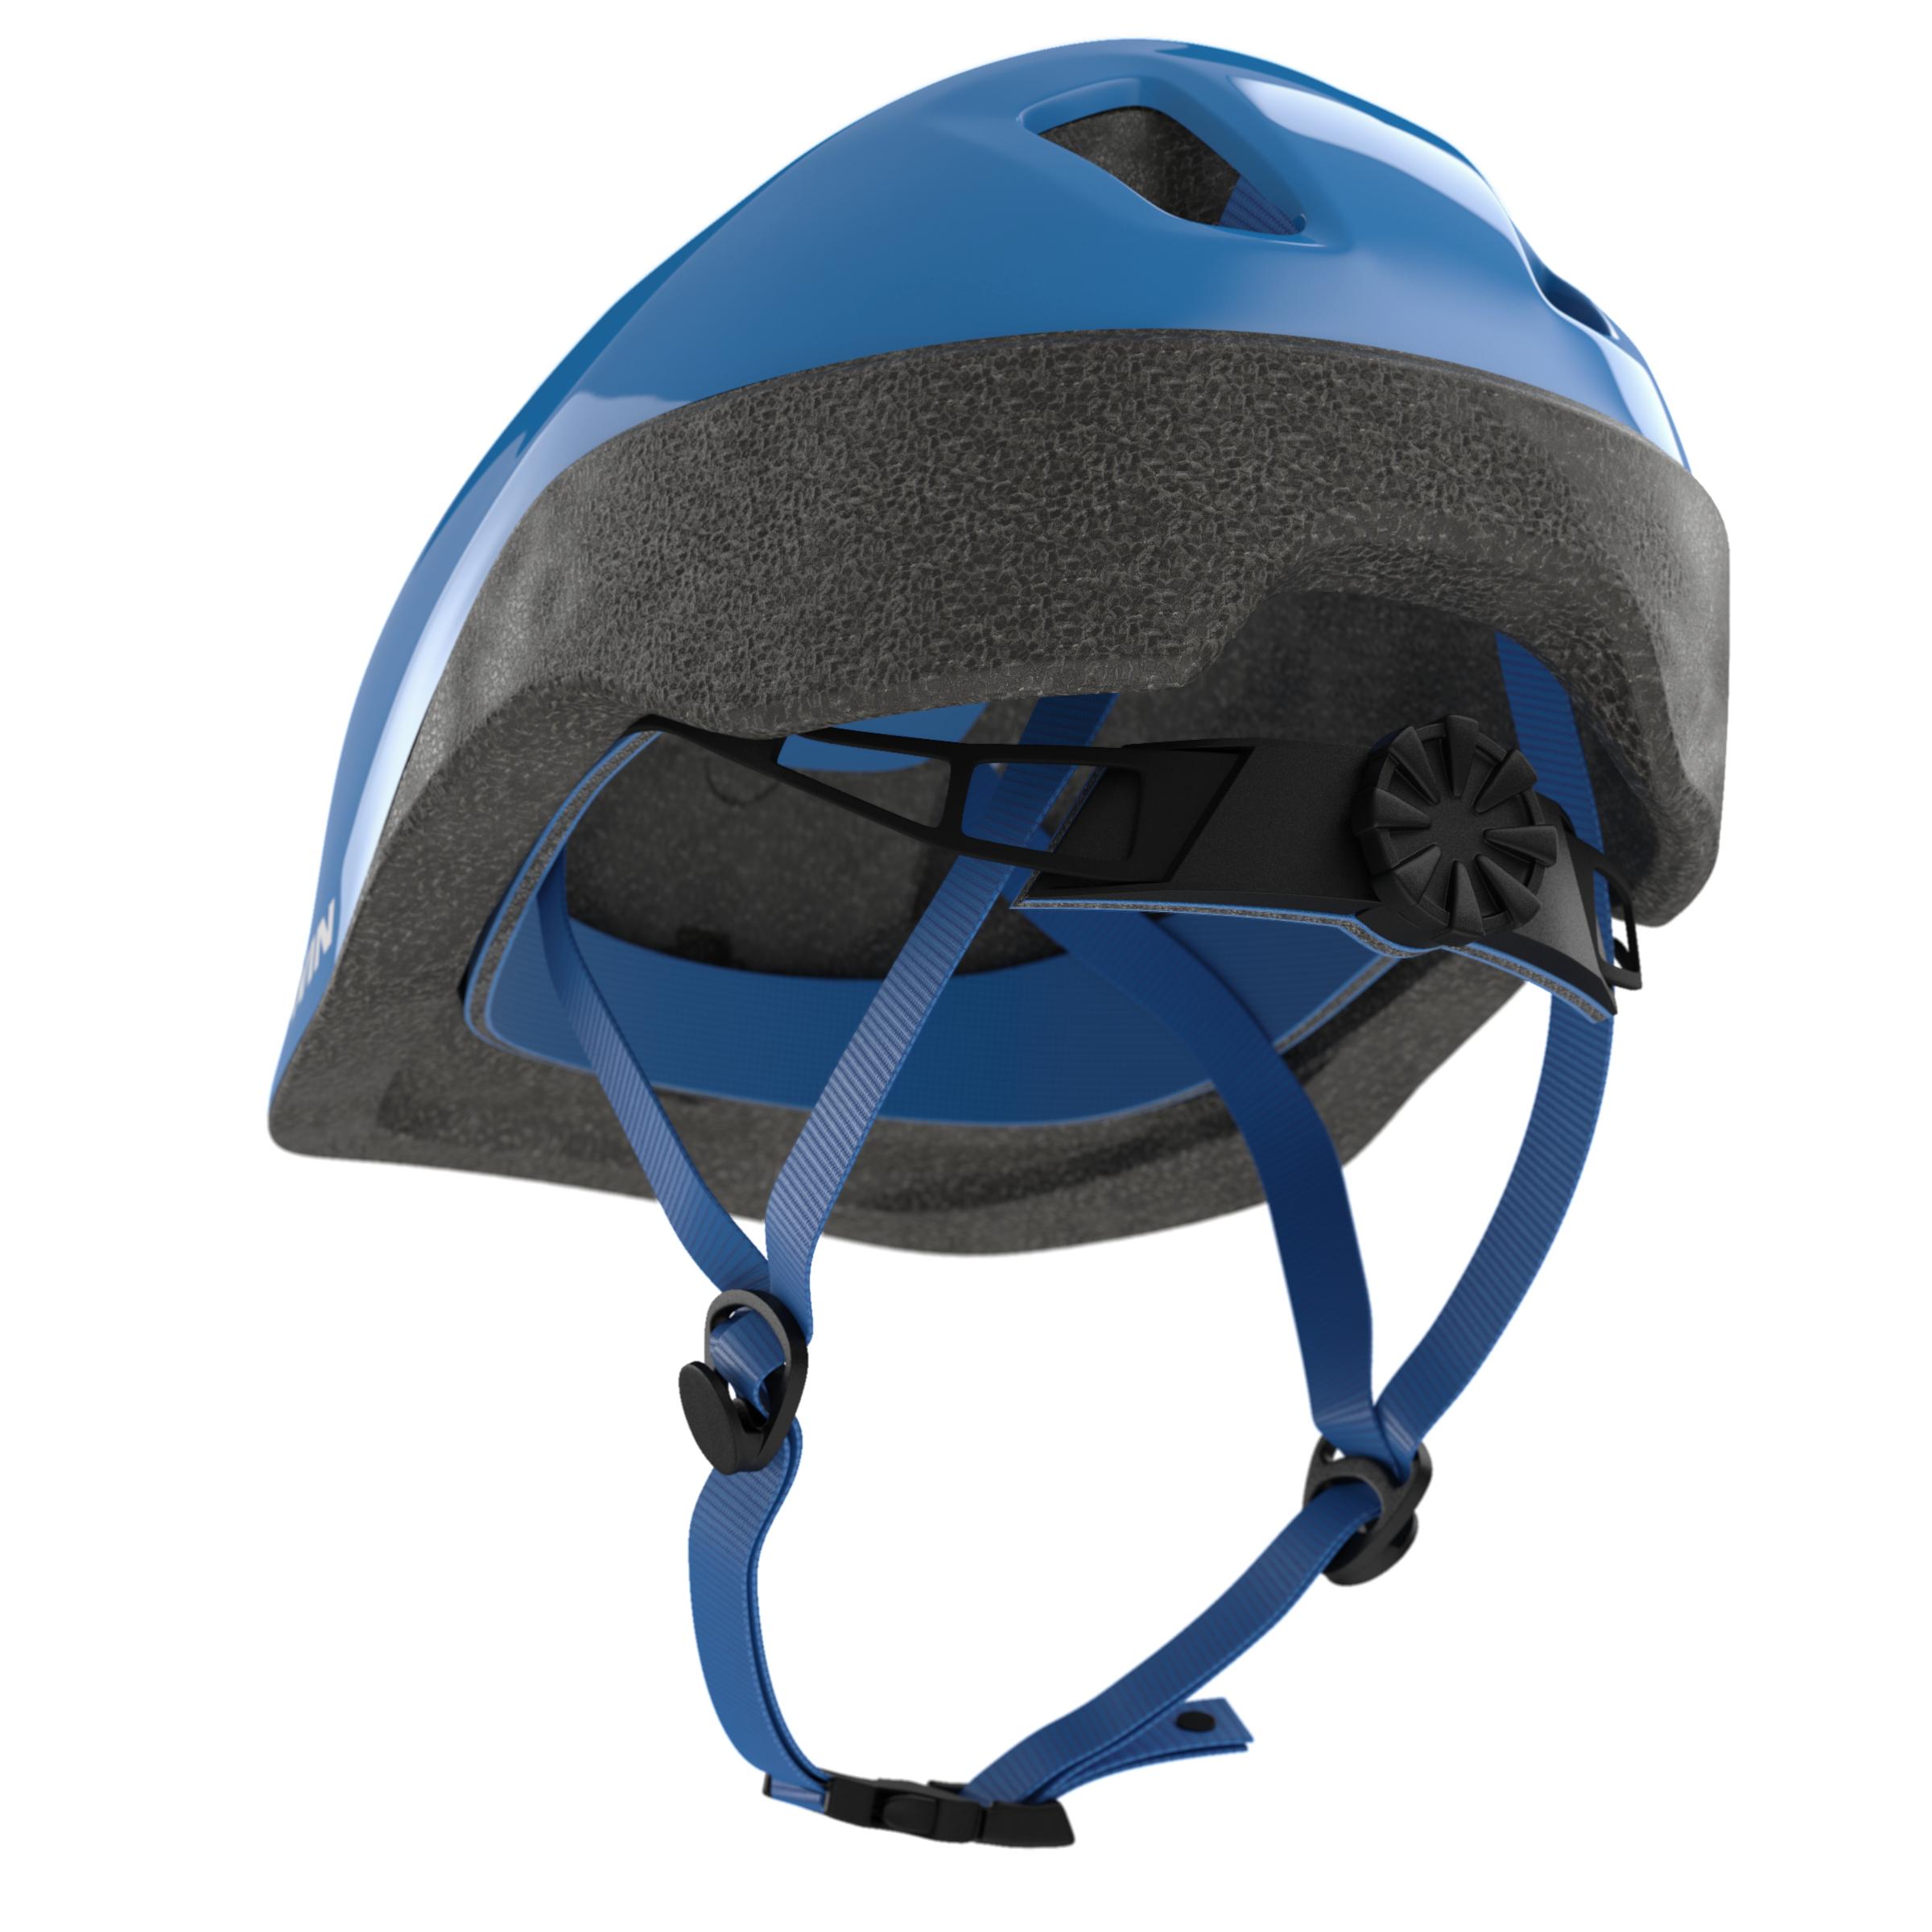 Kids' Cycling Helmet 500 - Blue 6/9